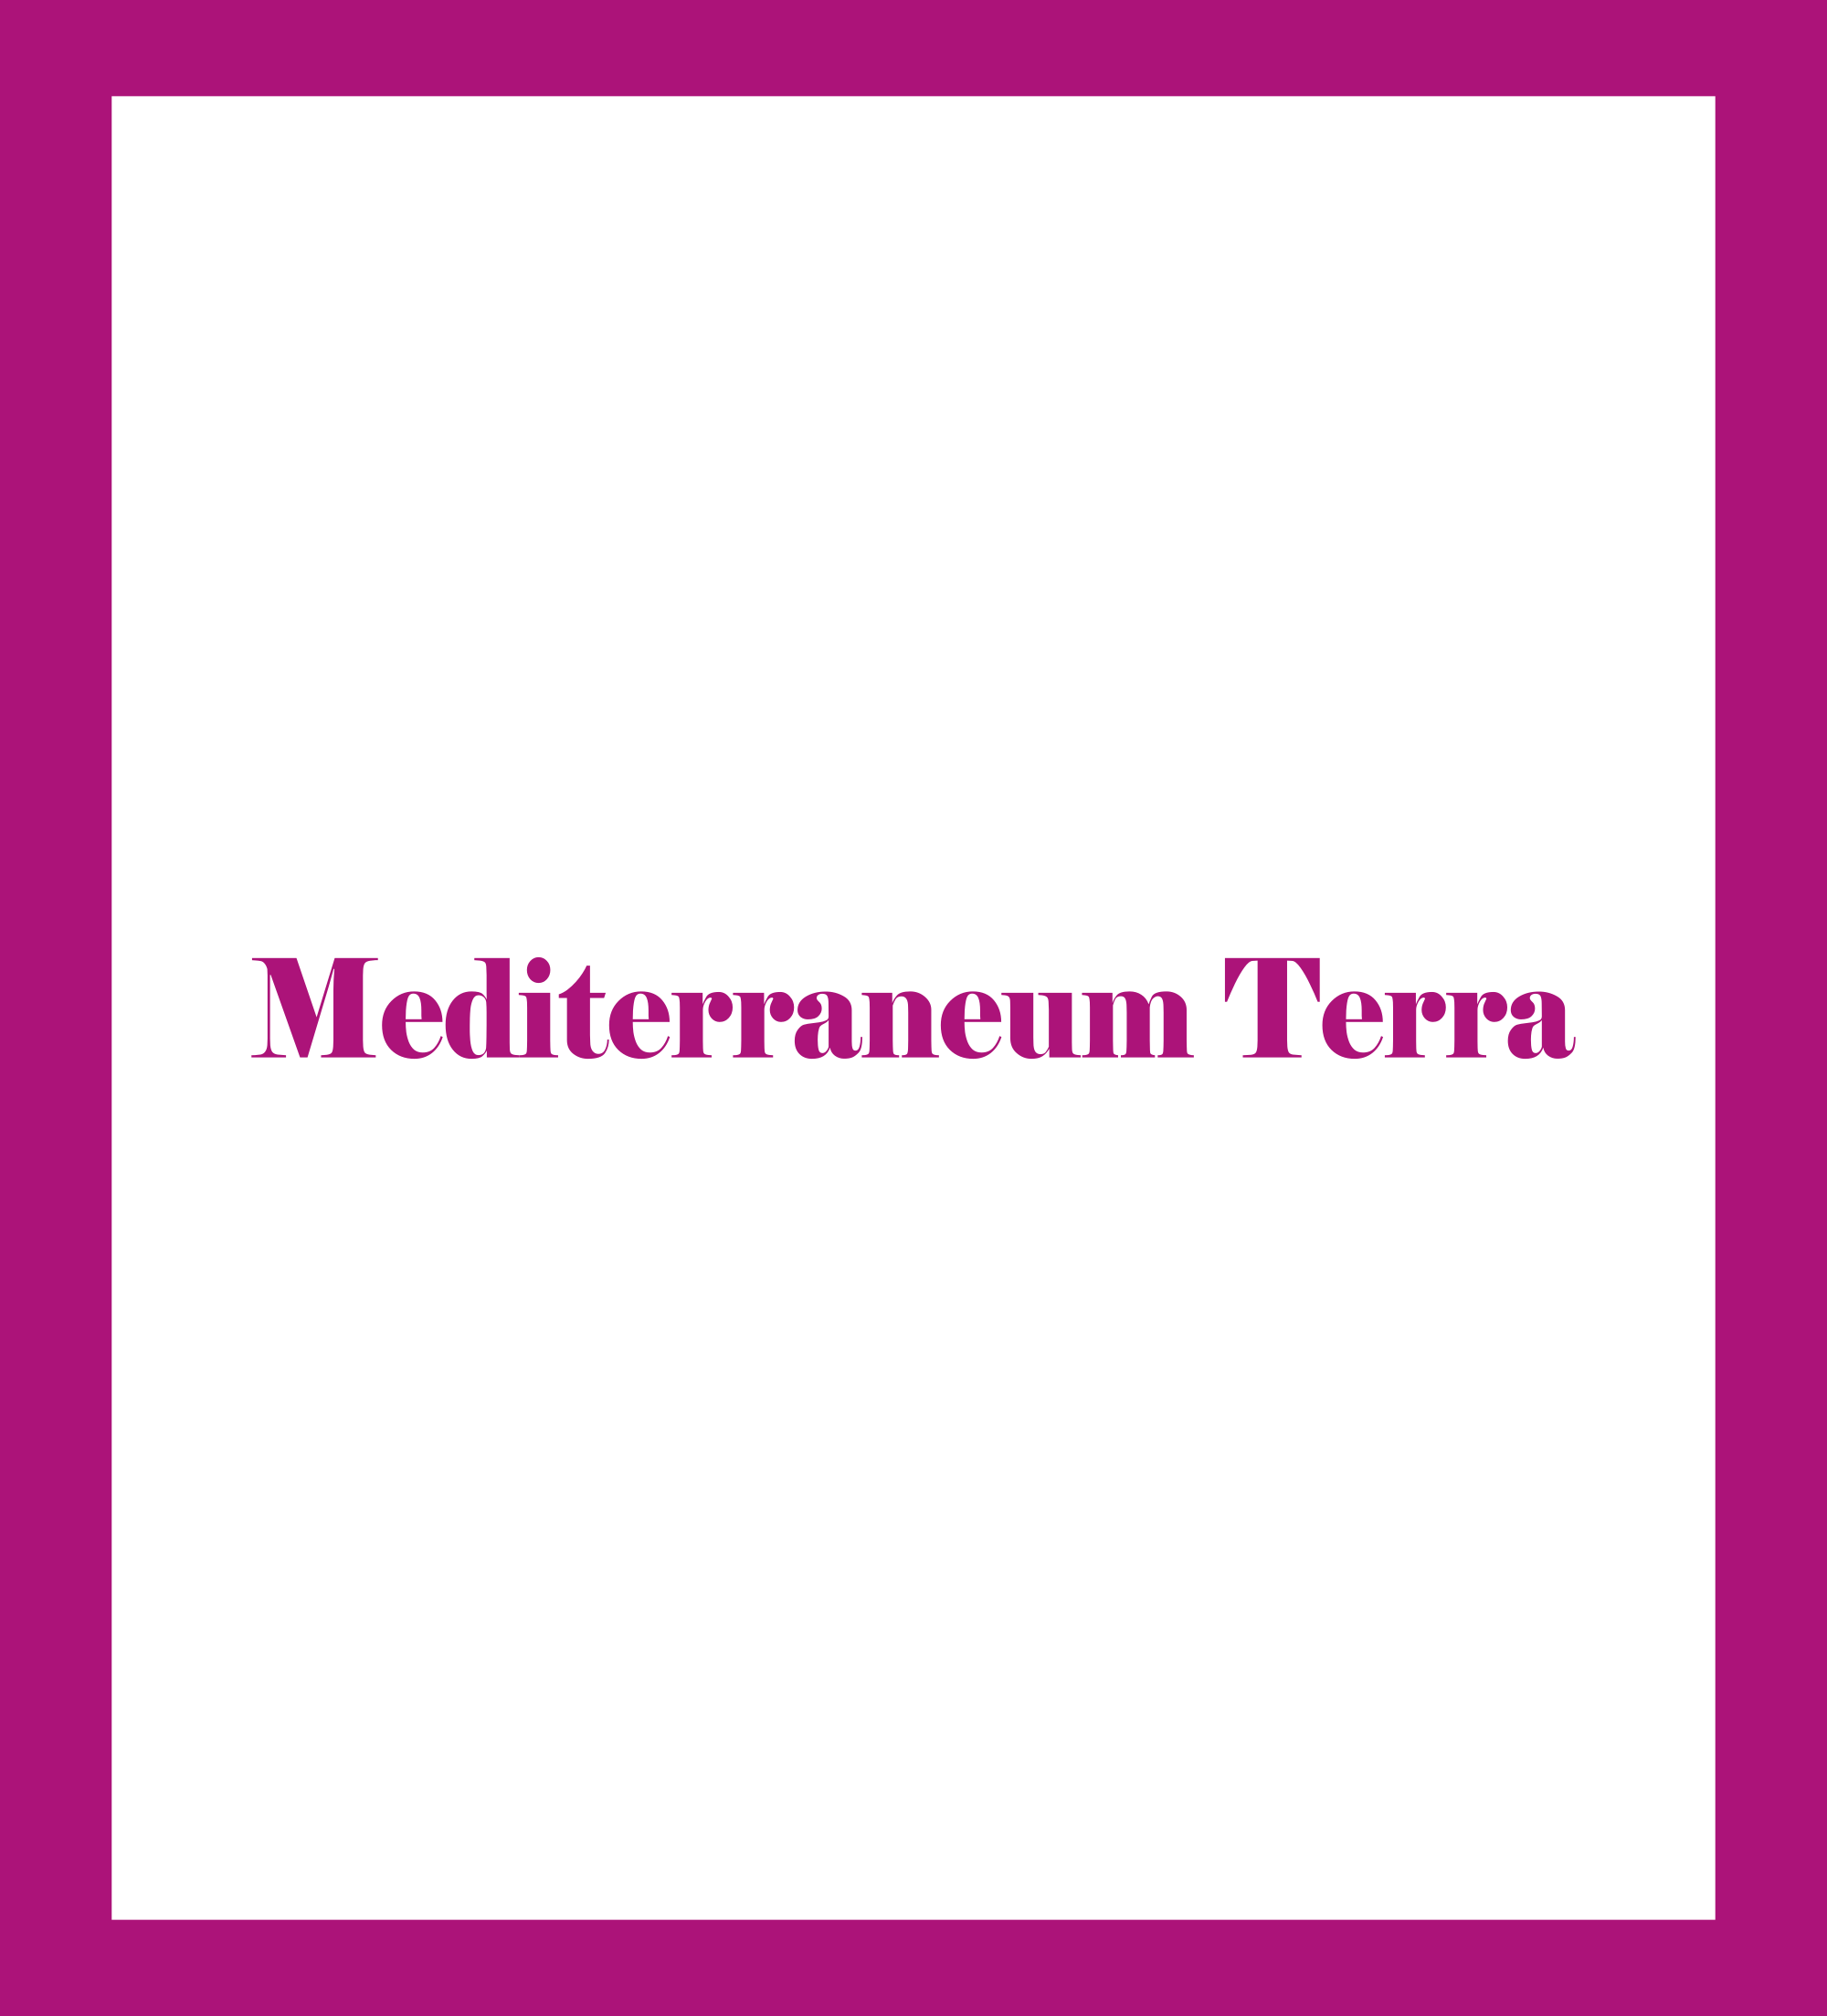 Mediterraneum Terra